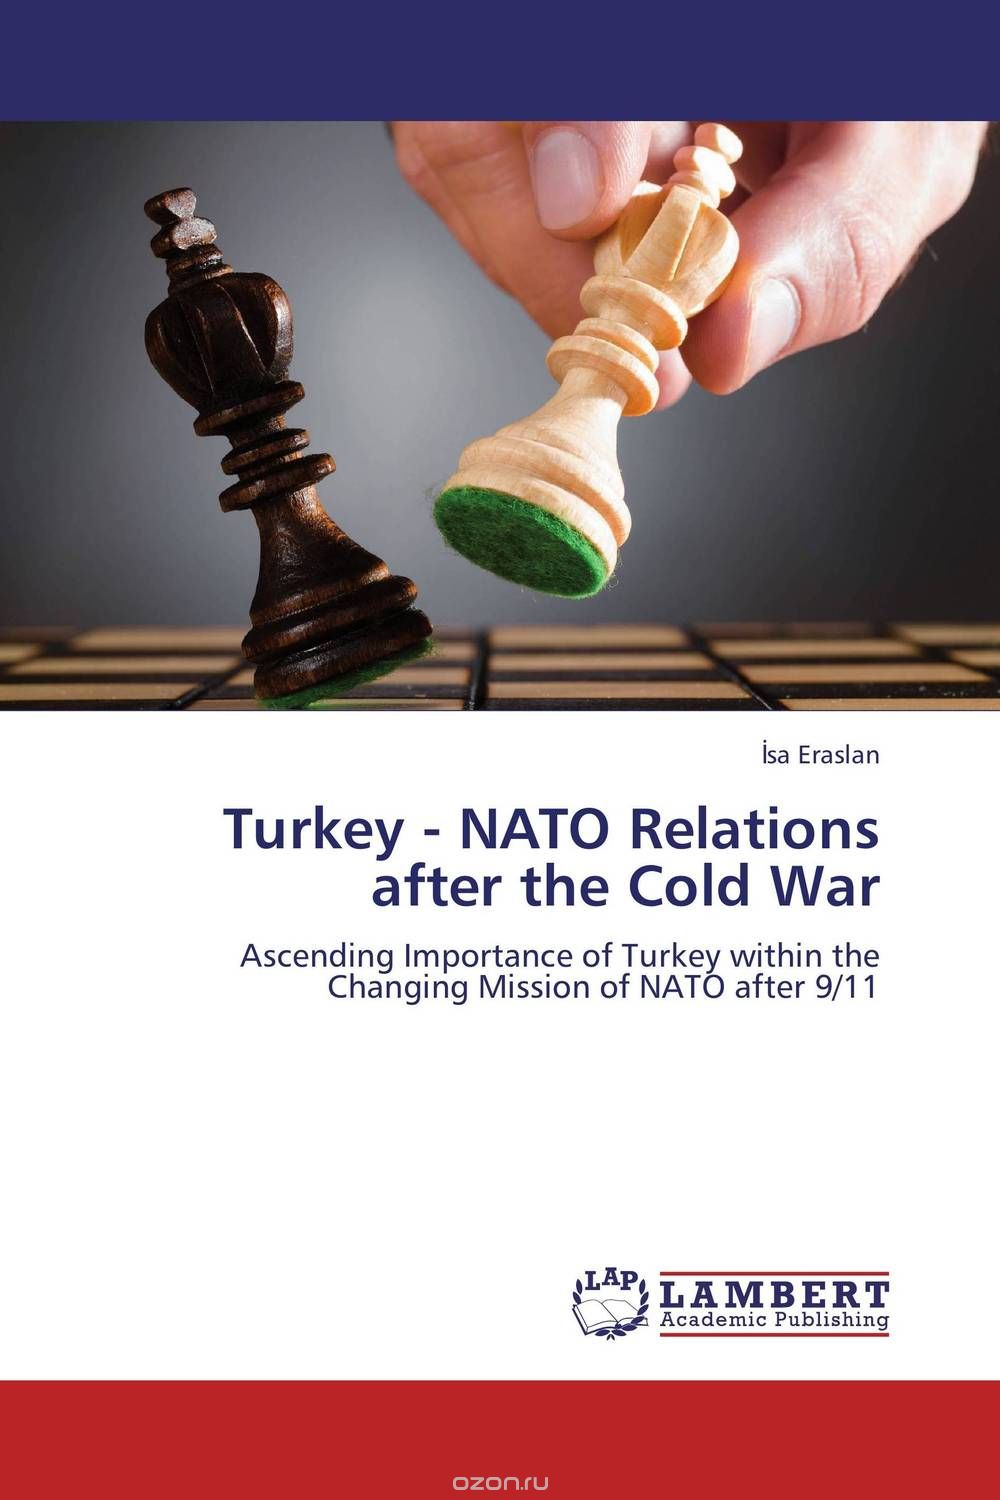 Скачать книгу "Turkey - NATO Relations after the Cold War"